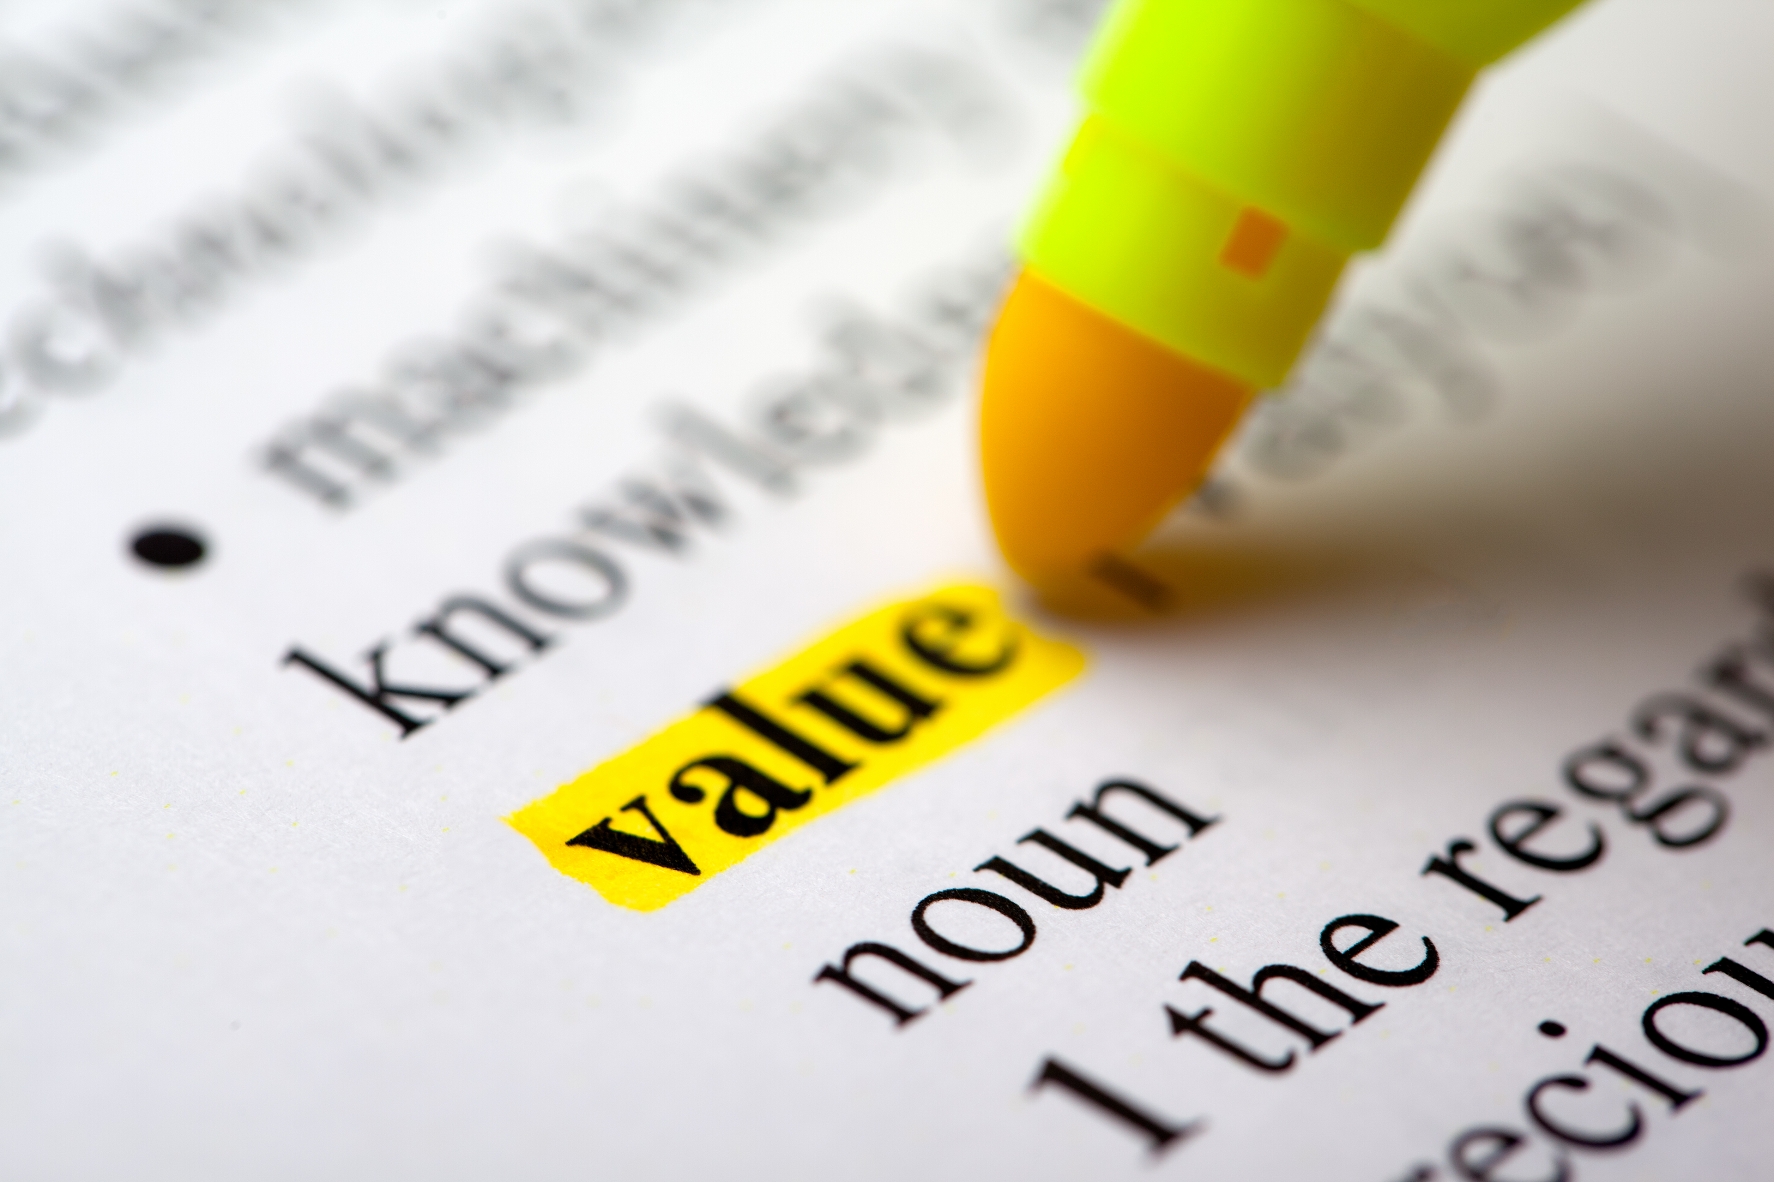 changing world lasting values essay